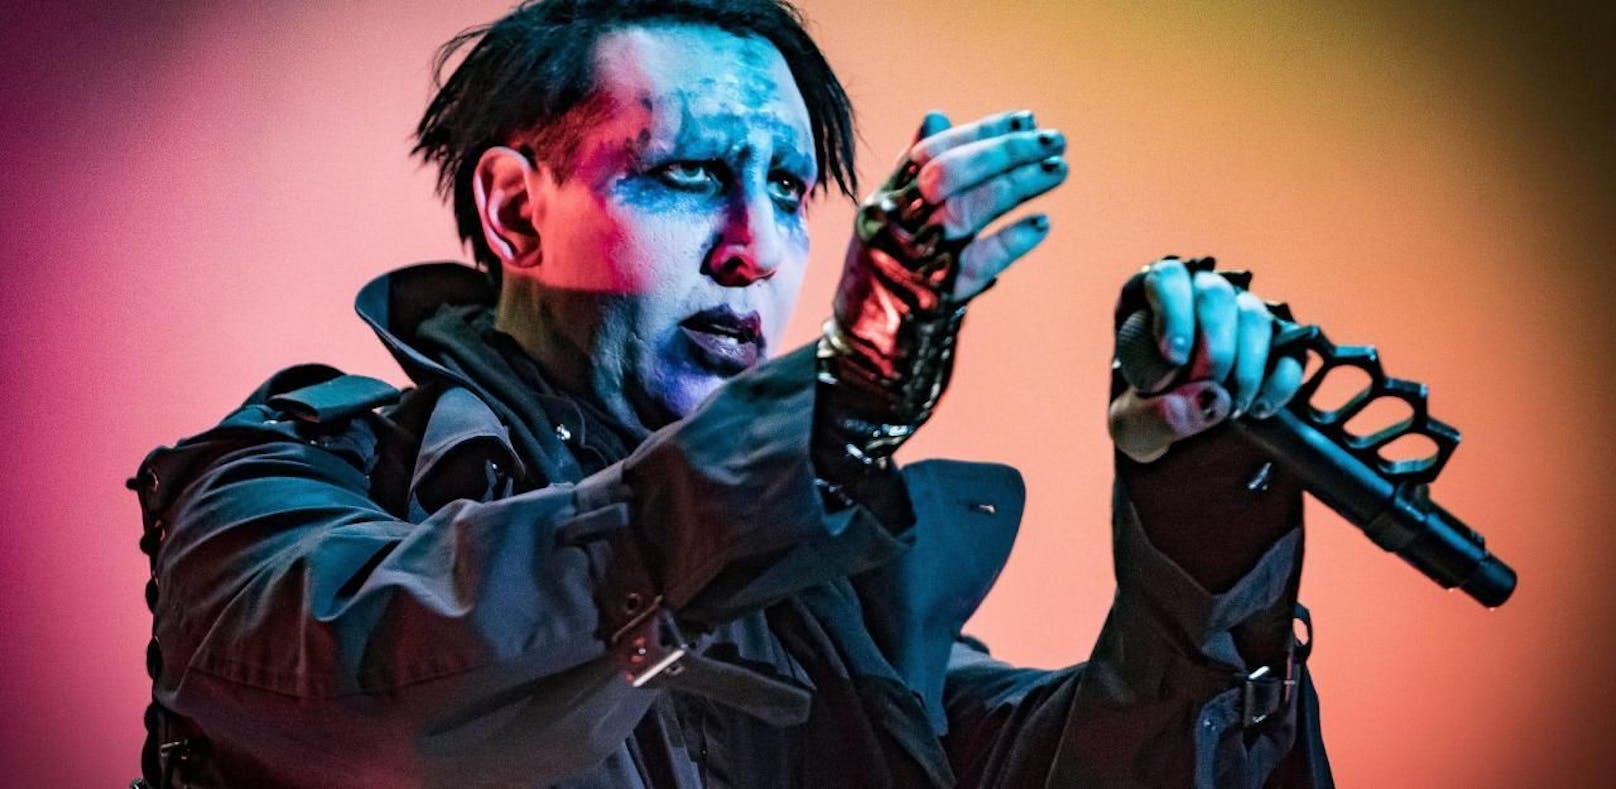 Marilyn Manson bricht Show nach vier Songs ab